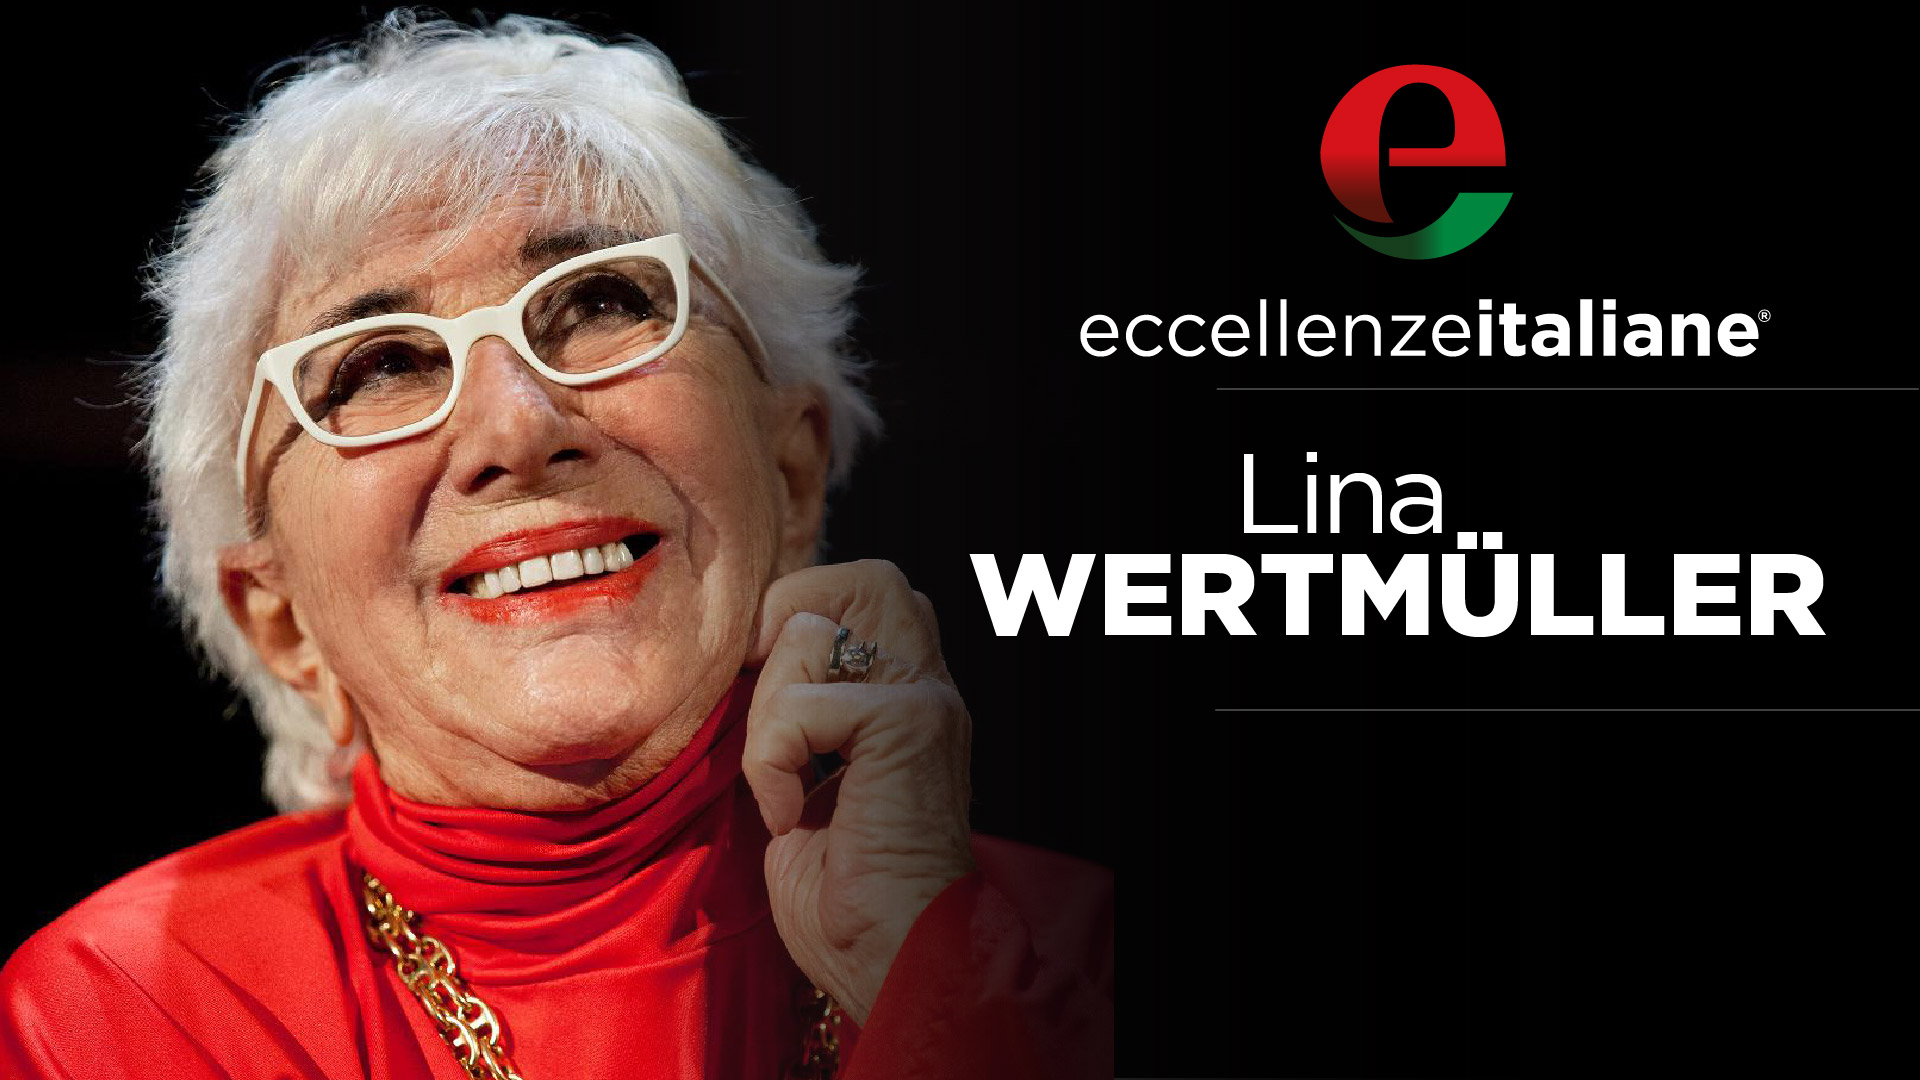 Lina Wertmuller, è una regista e sceneggiatrice italiana